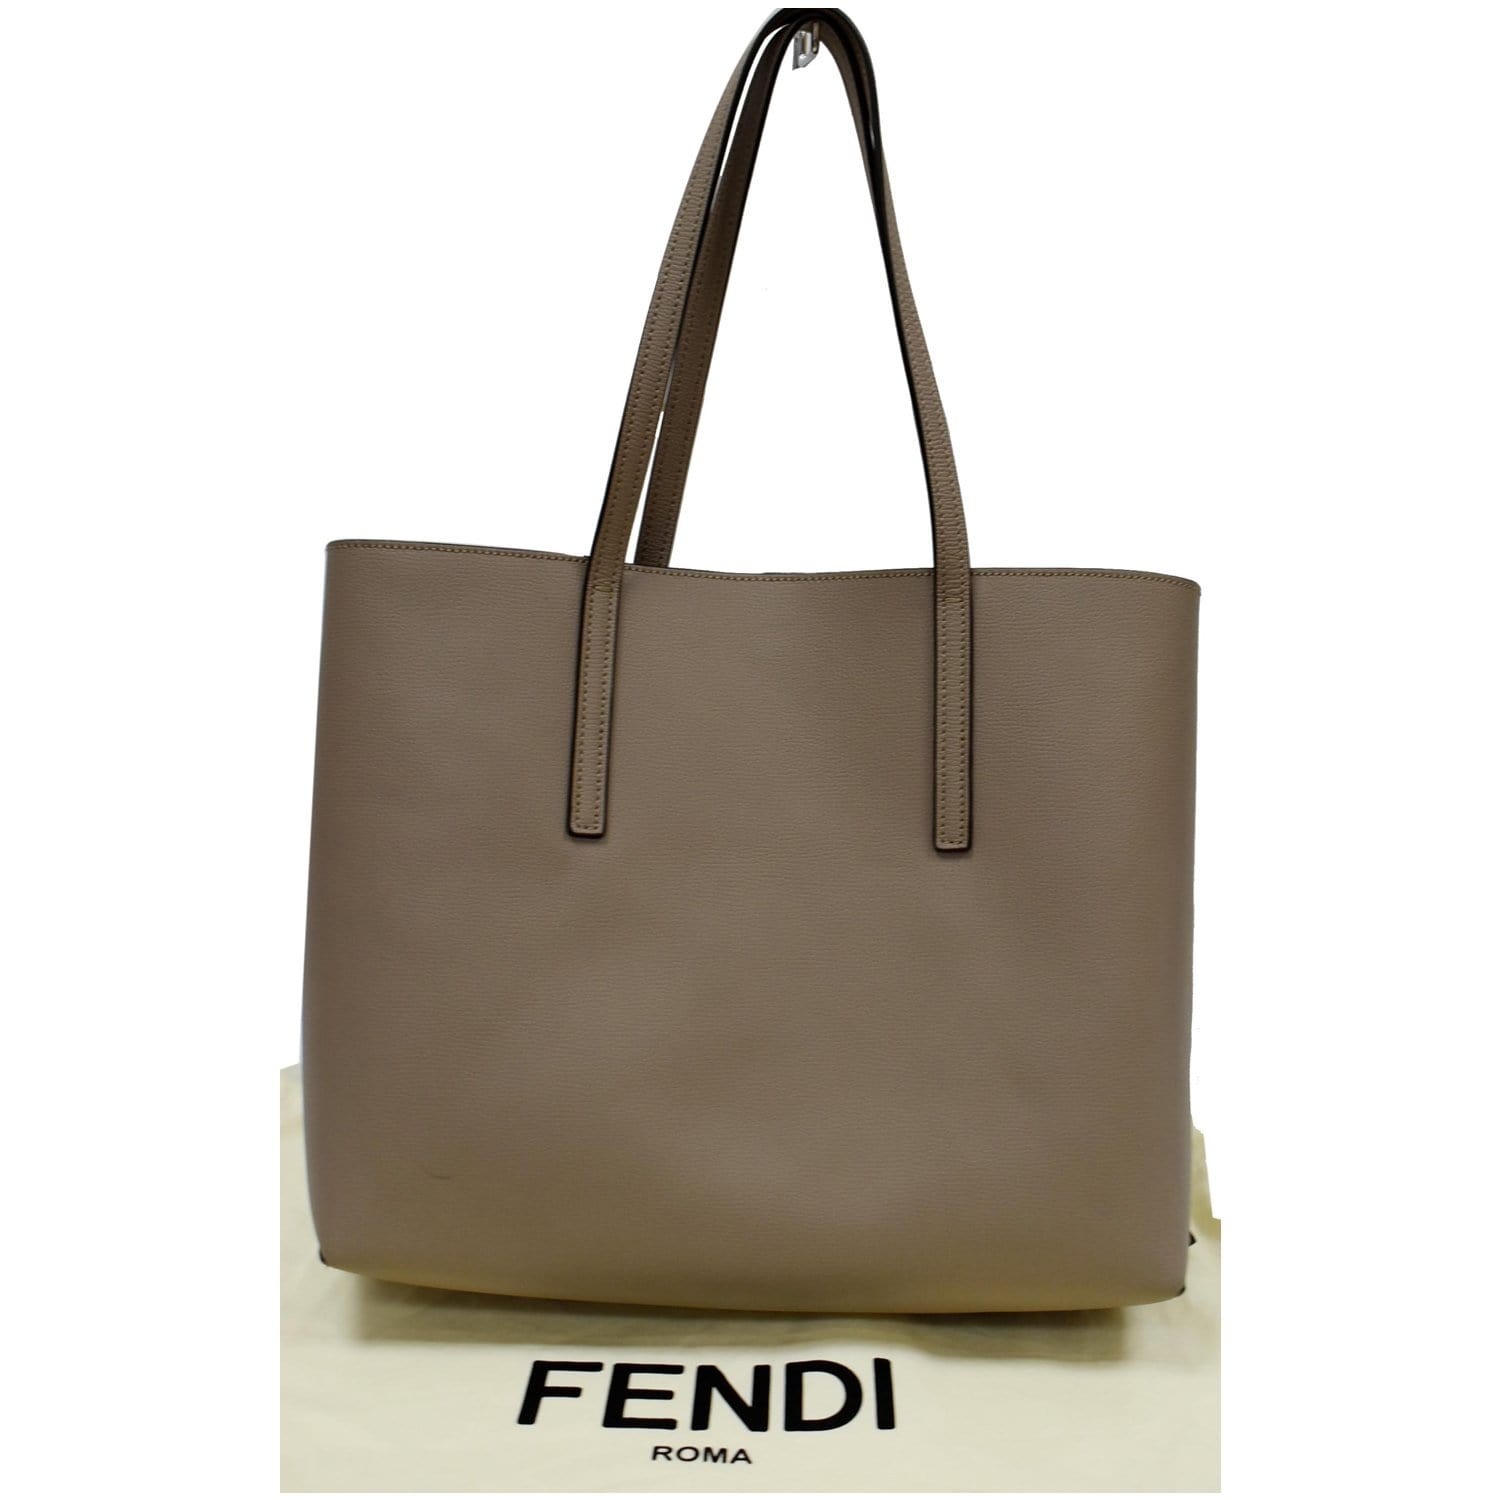 Fendi, Bags, Fendi Shopper Tote Bag